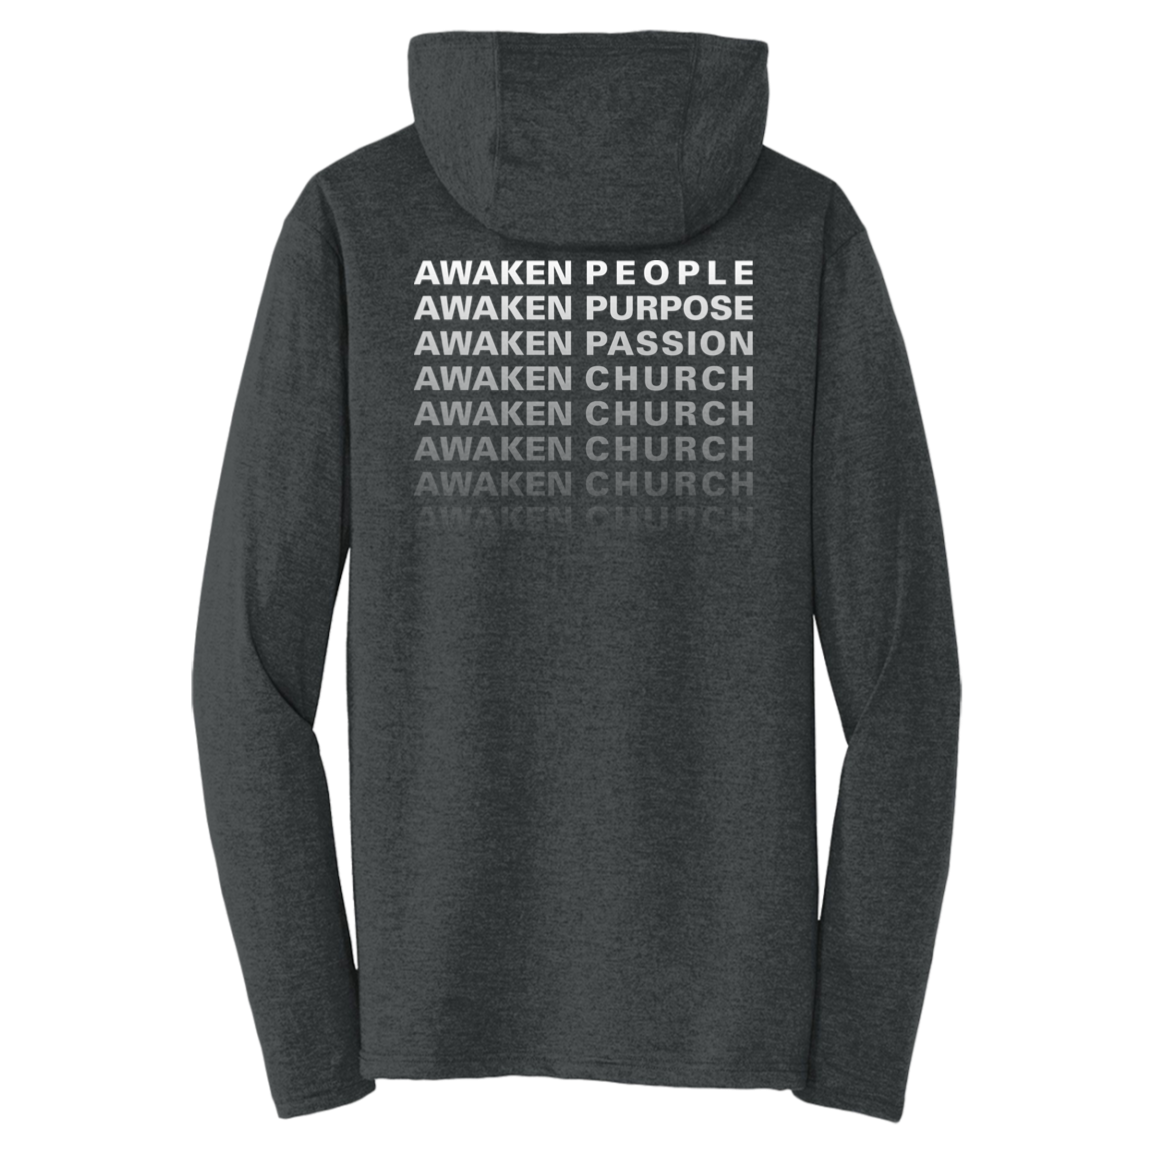 Awaken Church Hoodies - Back Print